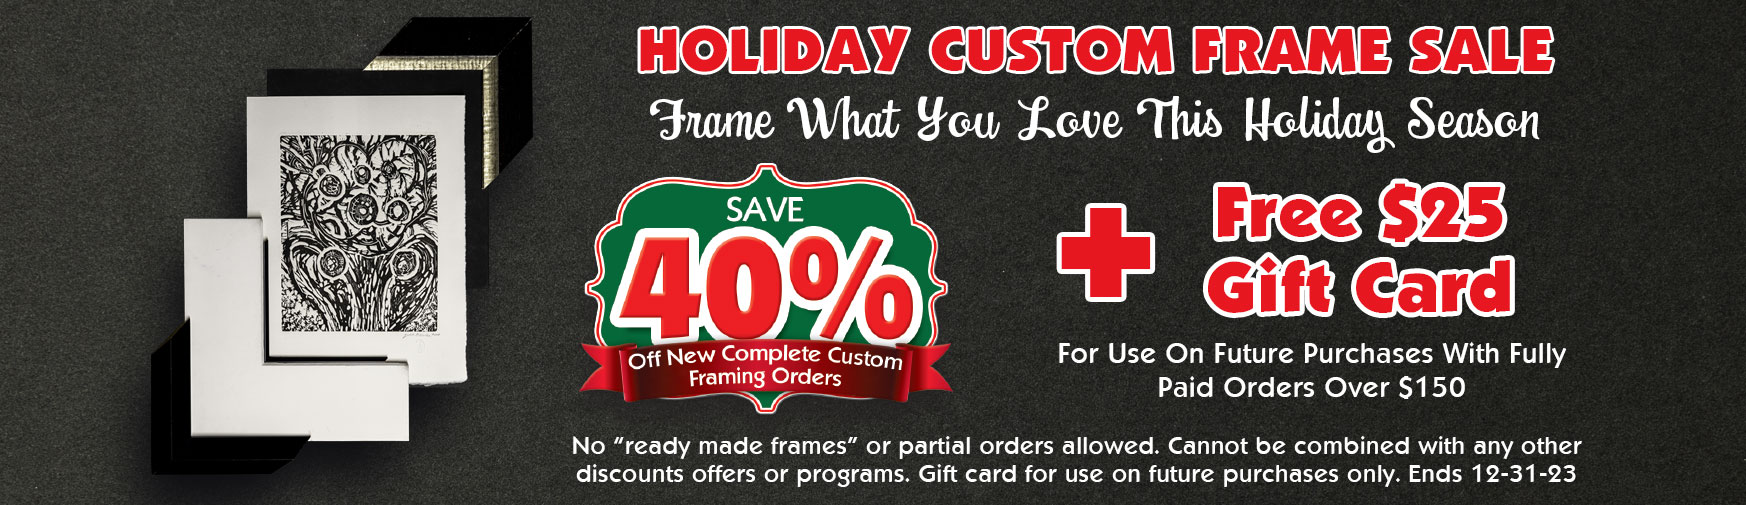 Holiday Custom Framing Sale